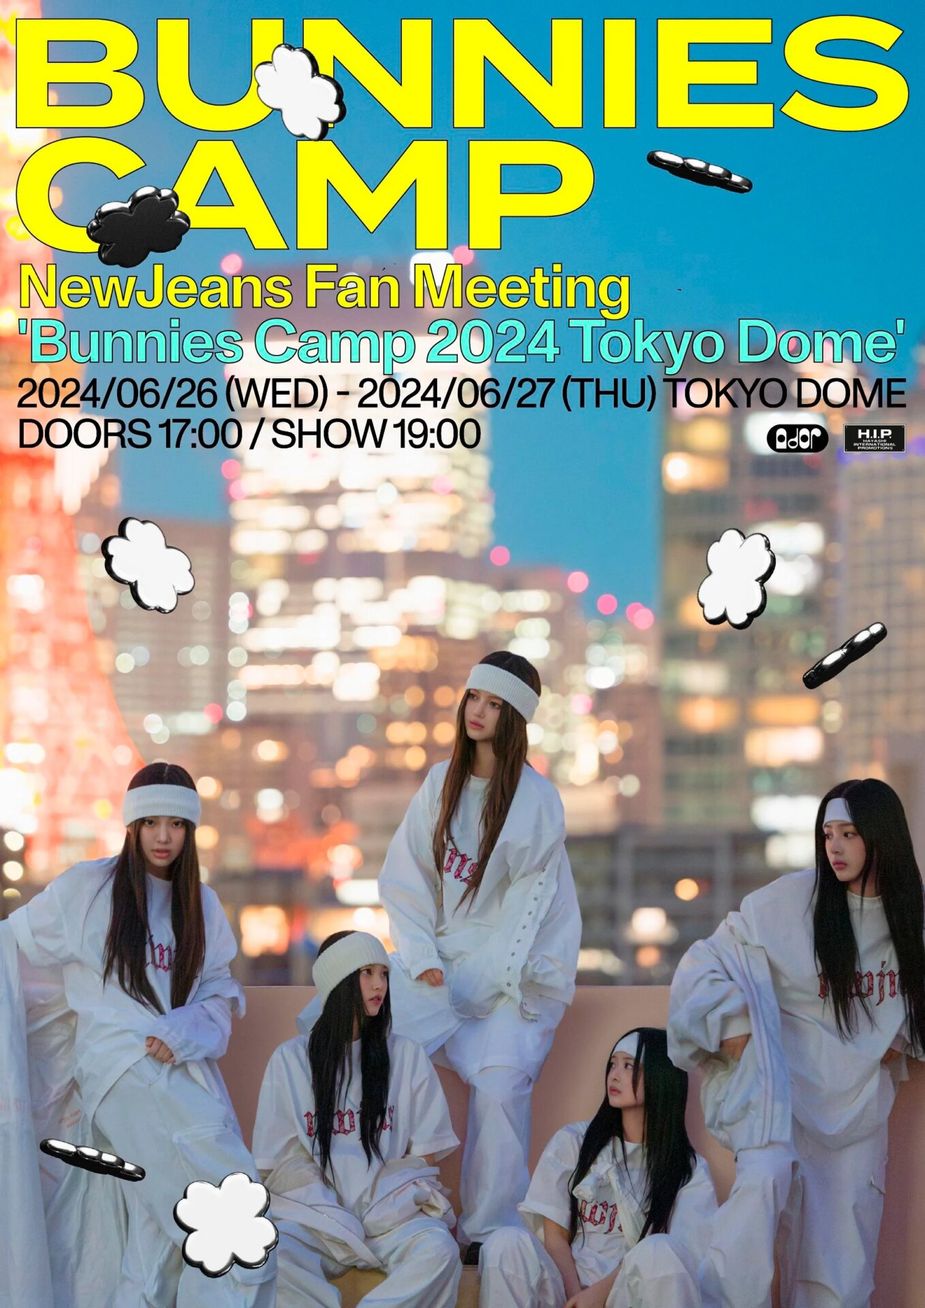 240330-newjeans-fan-meeting-bunnies-camp-2024-tokyo-dome-v0-9vnv31zqharc1